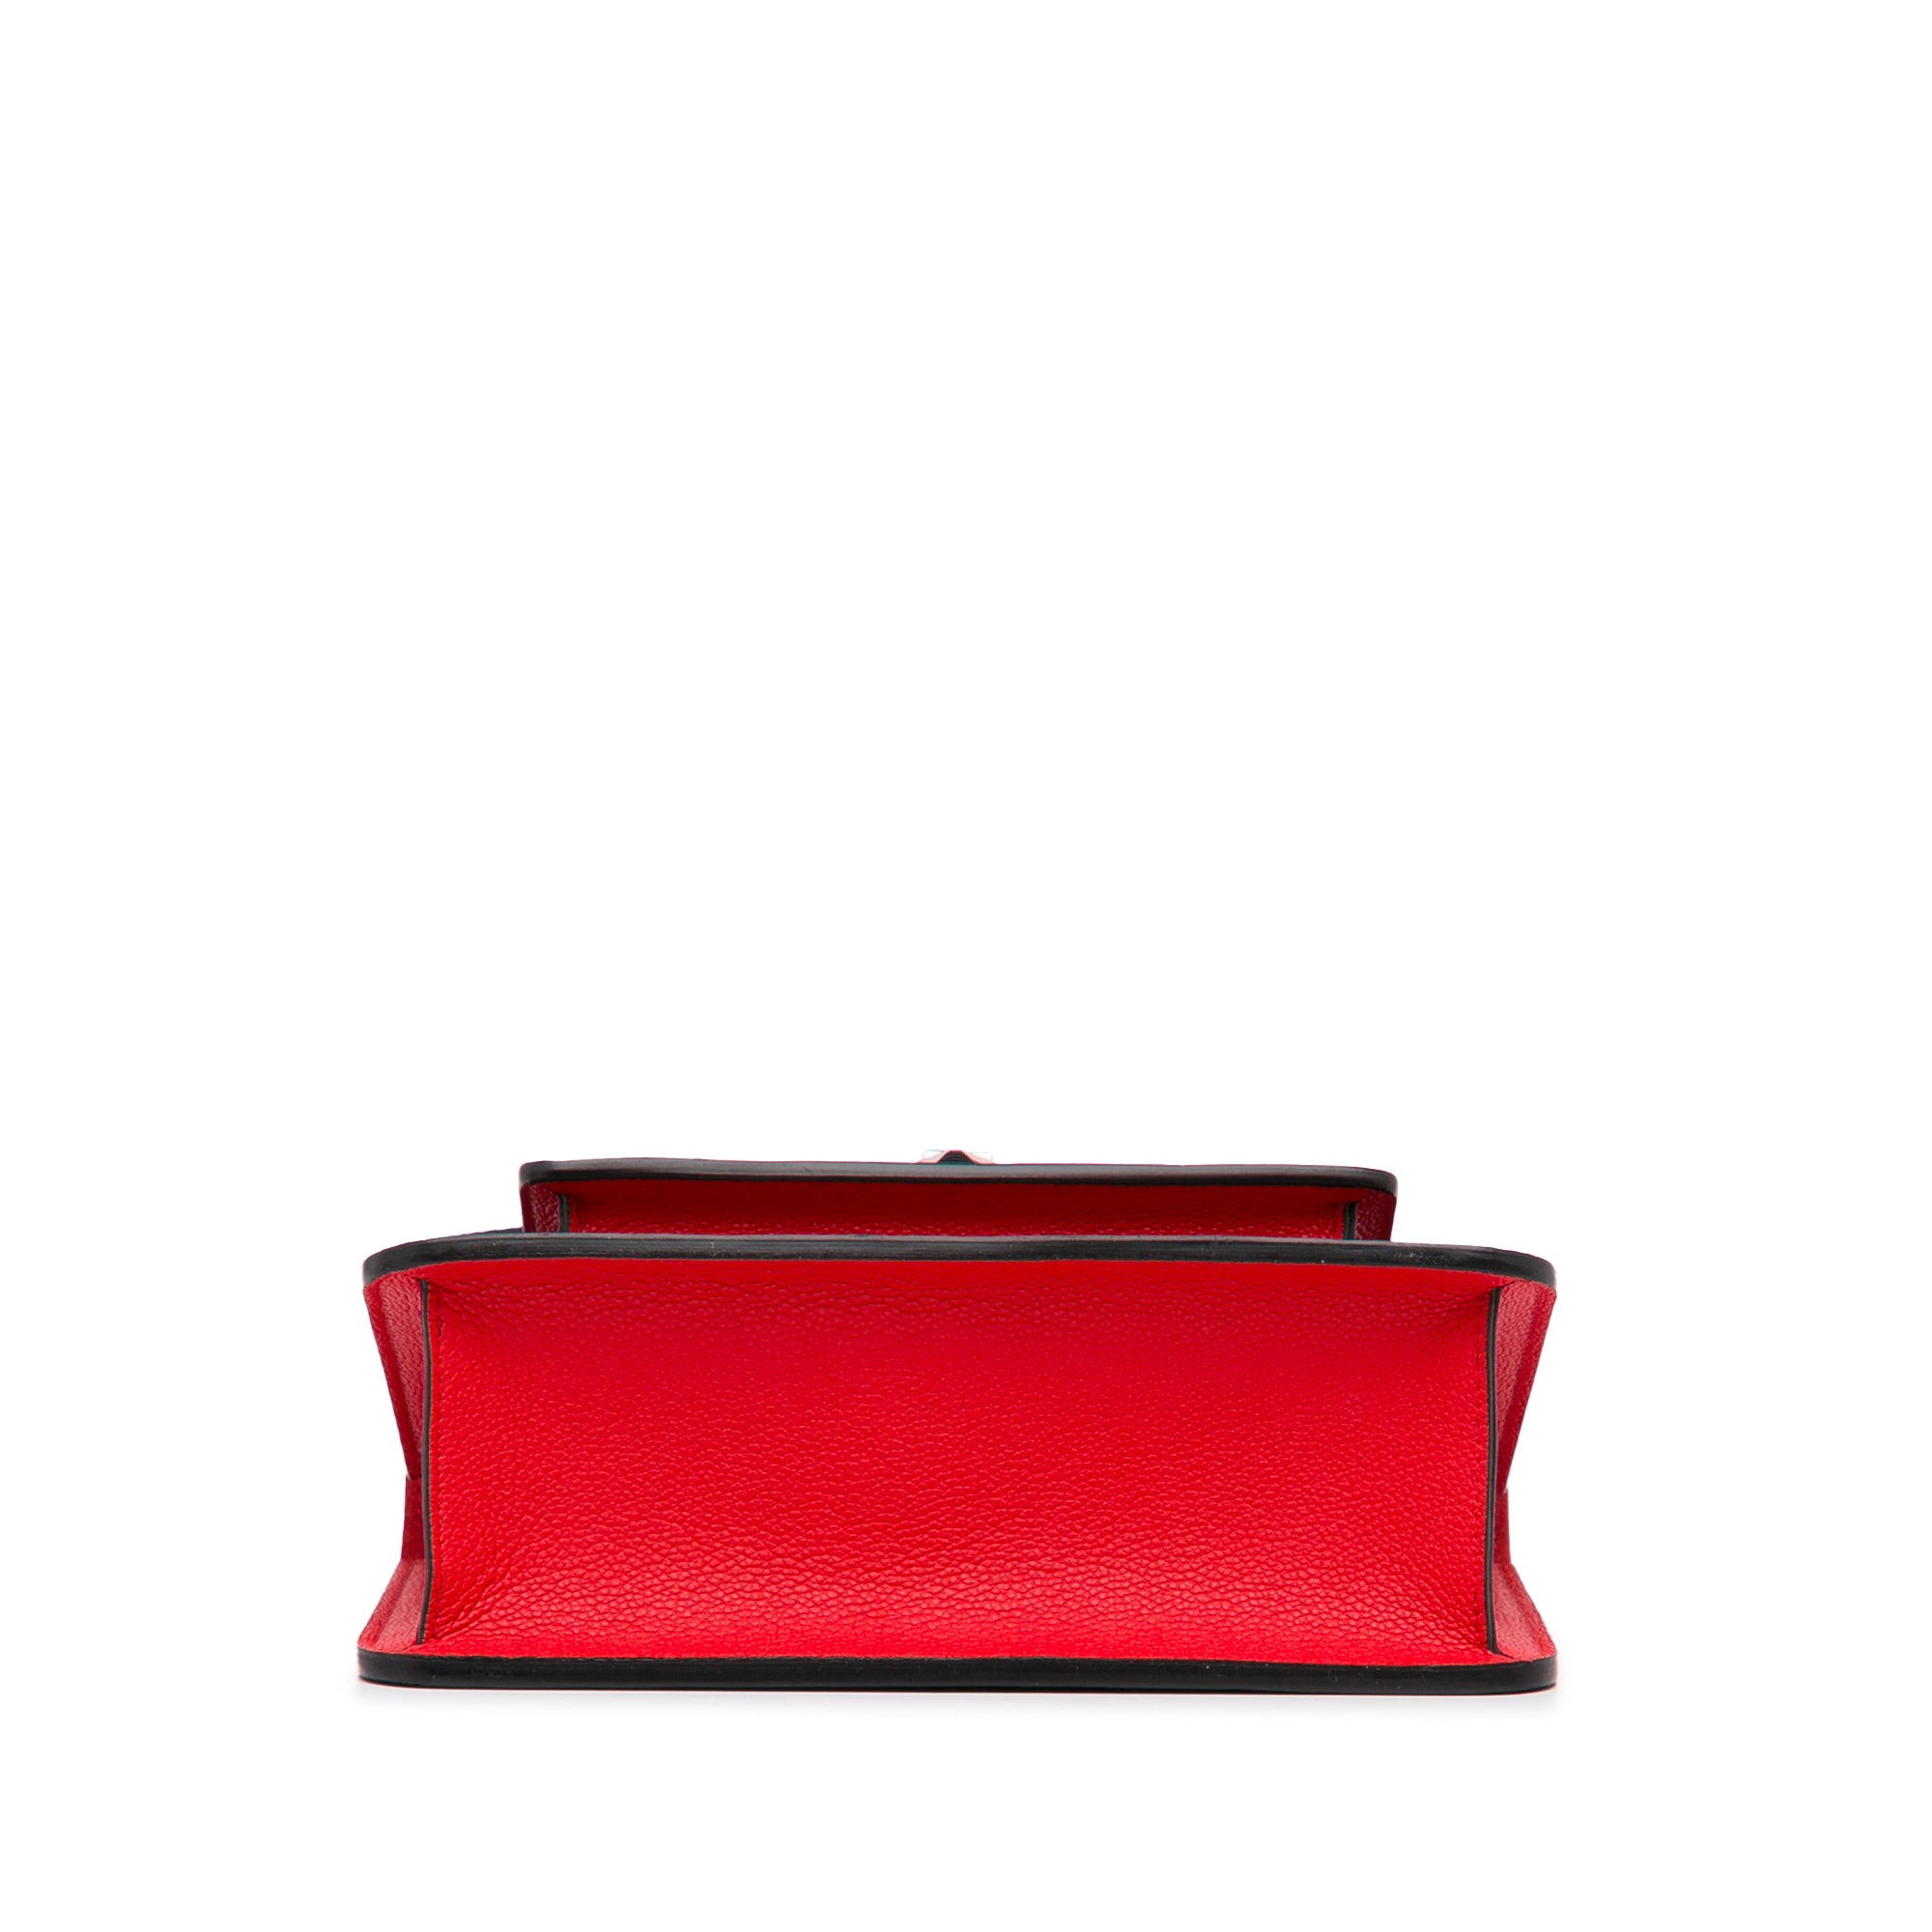 NEO MONCEAU, New Handbag By Louis Vuitton! 